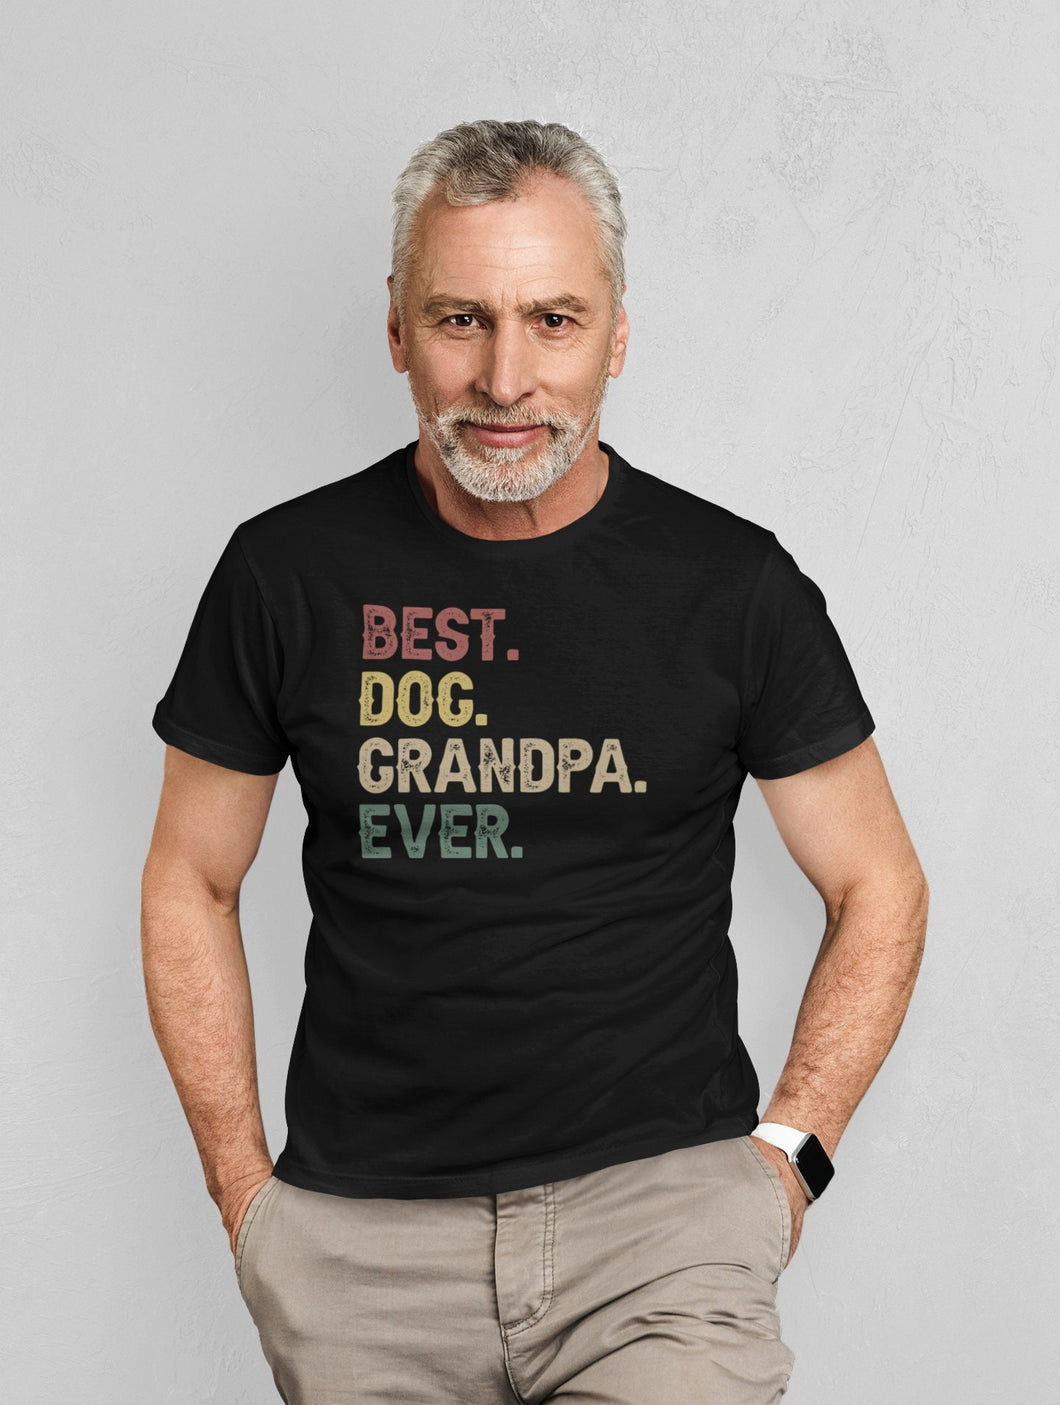 Best Dog Grandpa Ever Shirt, Dog Grandpa Shirt, Retro Dog Grandfather, Dog Owner Shirt